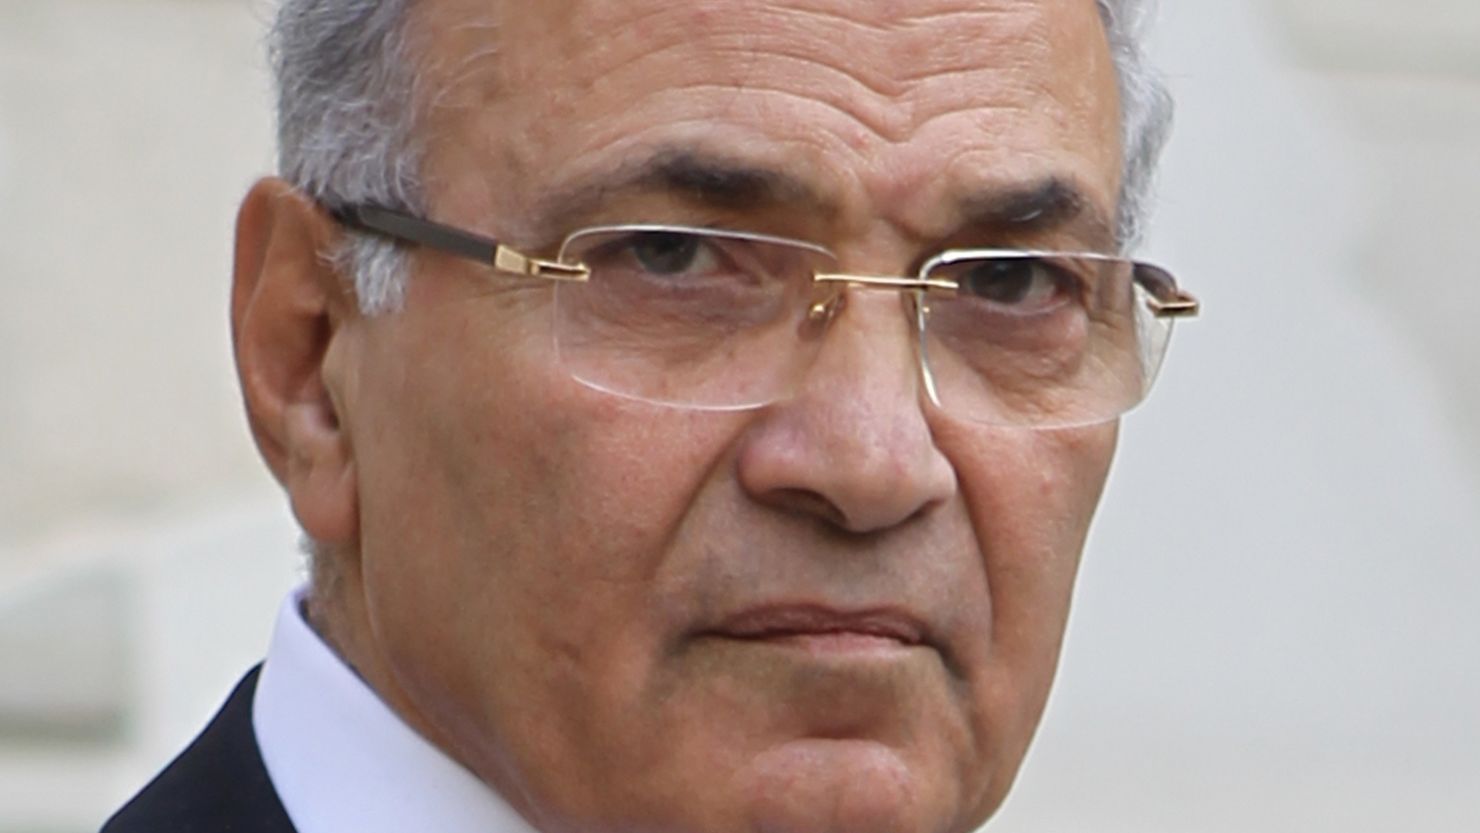 Former Egyptian Prime Minister Ahmed Shafik pictured on February 21, 2011.